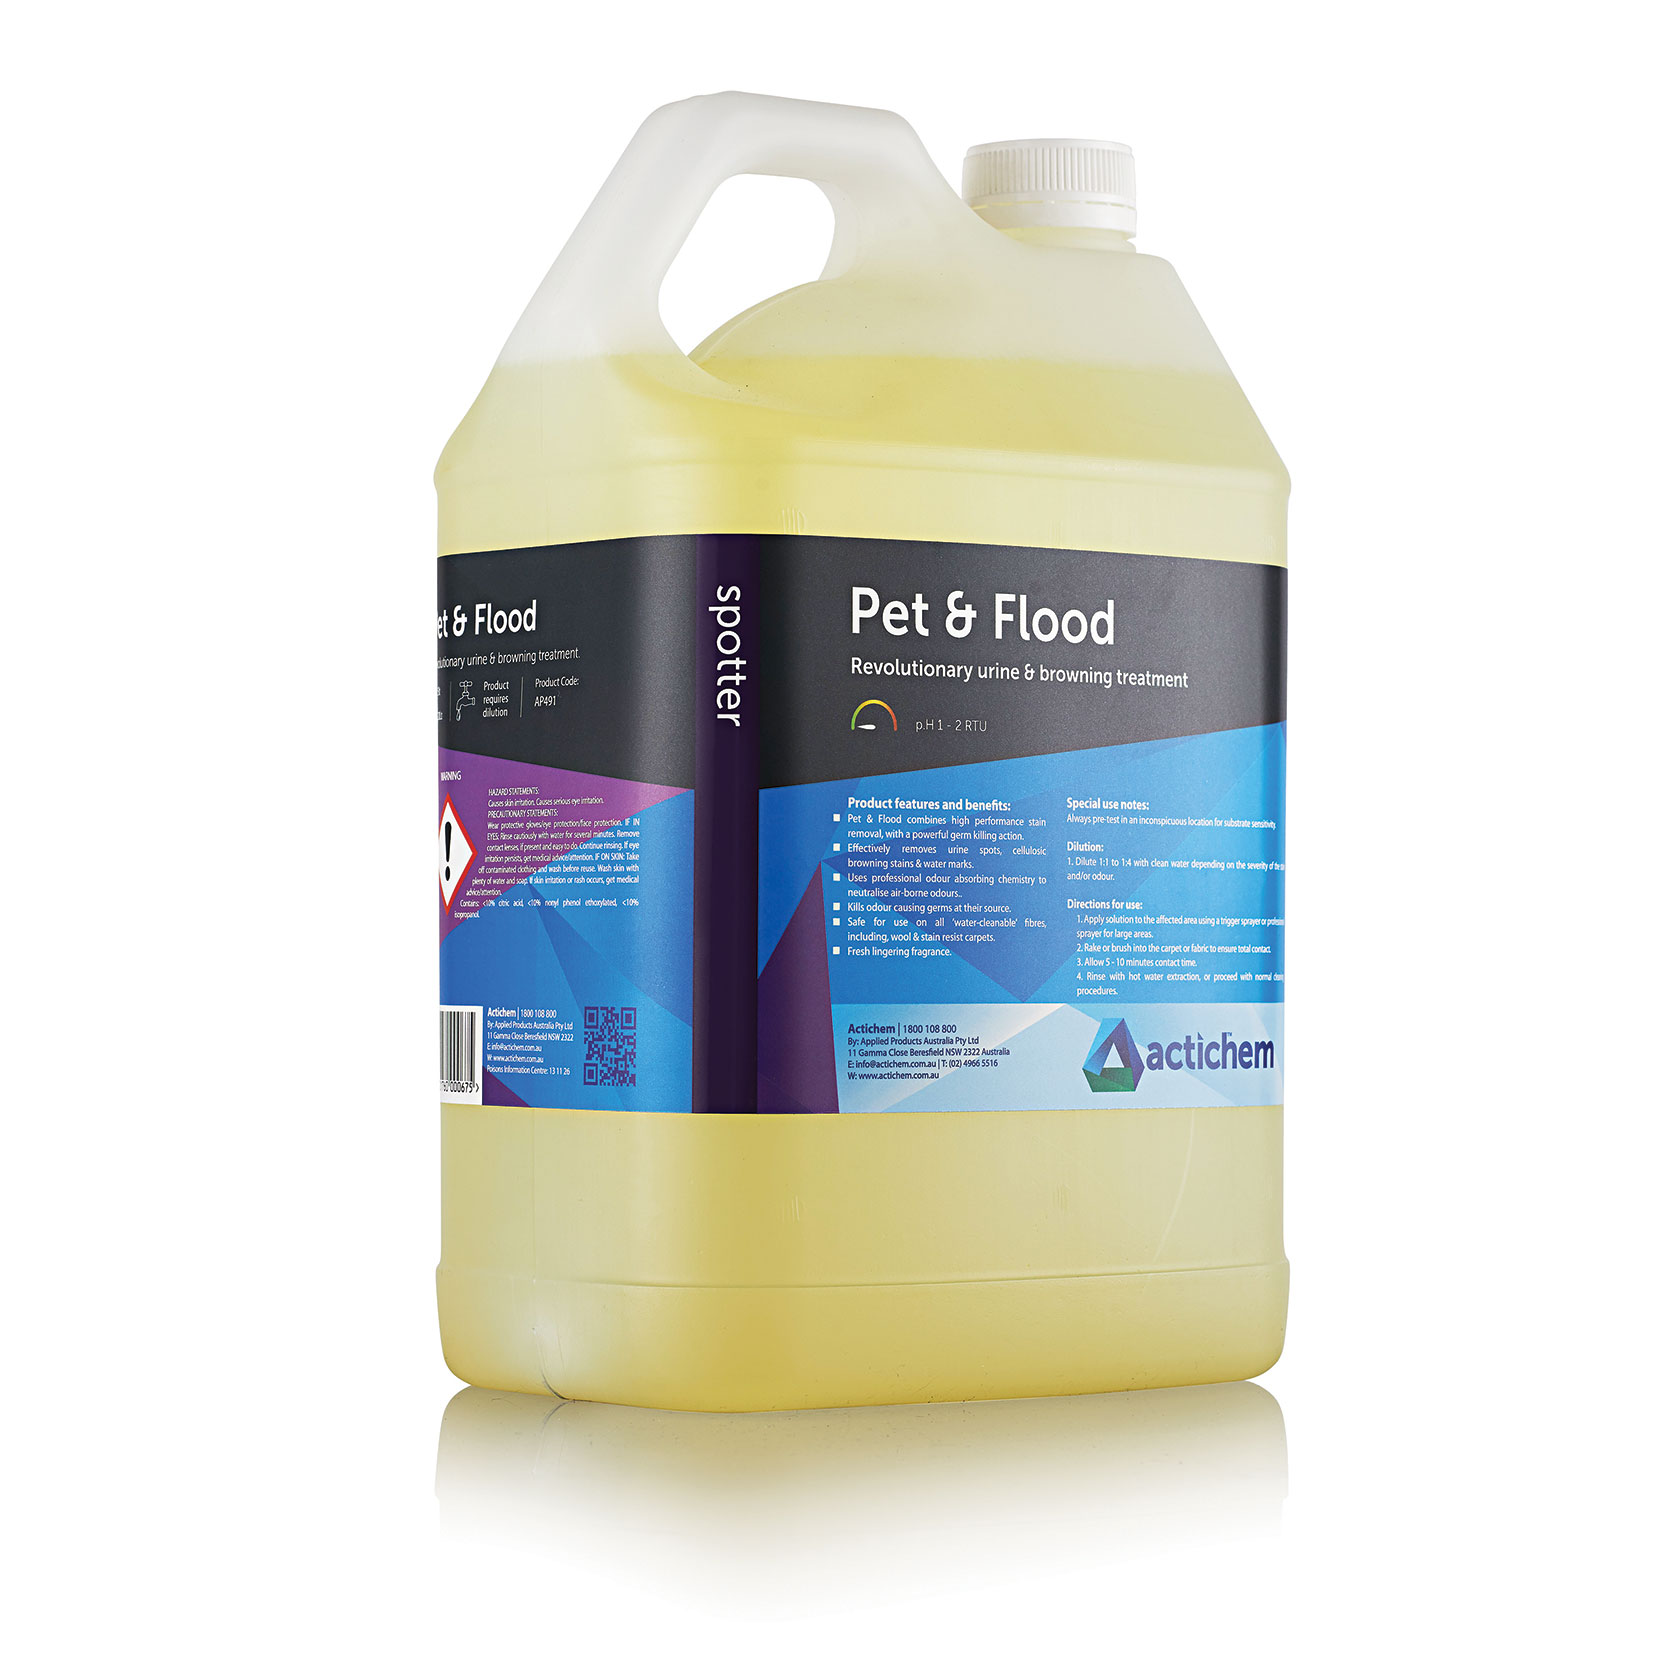 Actichem Pet n Flood Flood and urine decontaminant